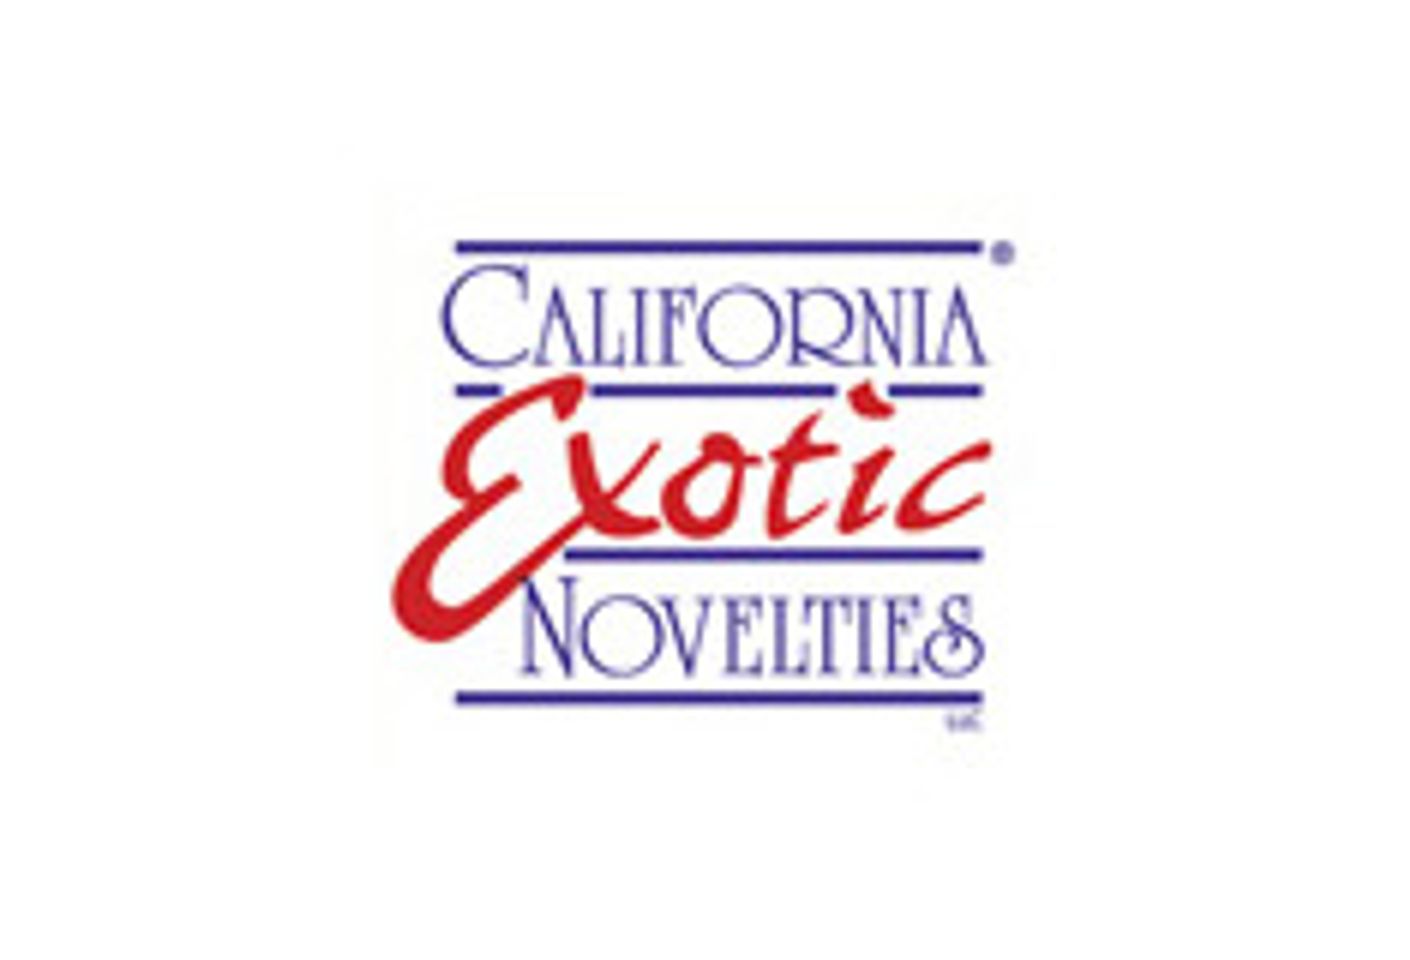 Company Profile: California Exotic Novelties